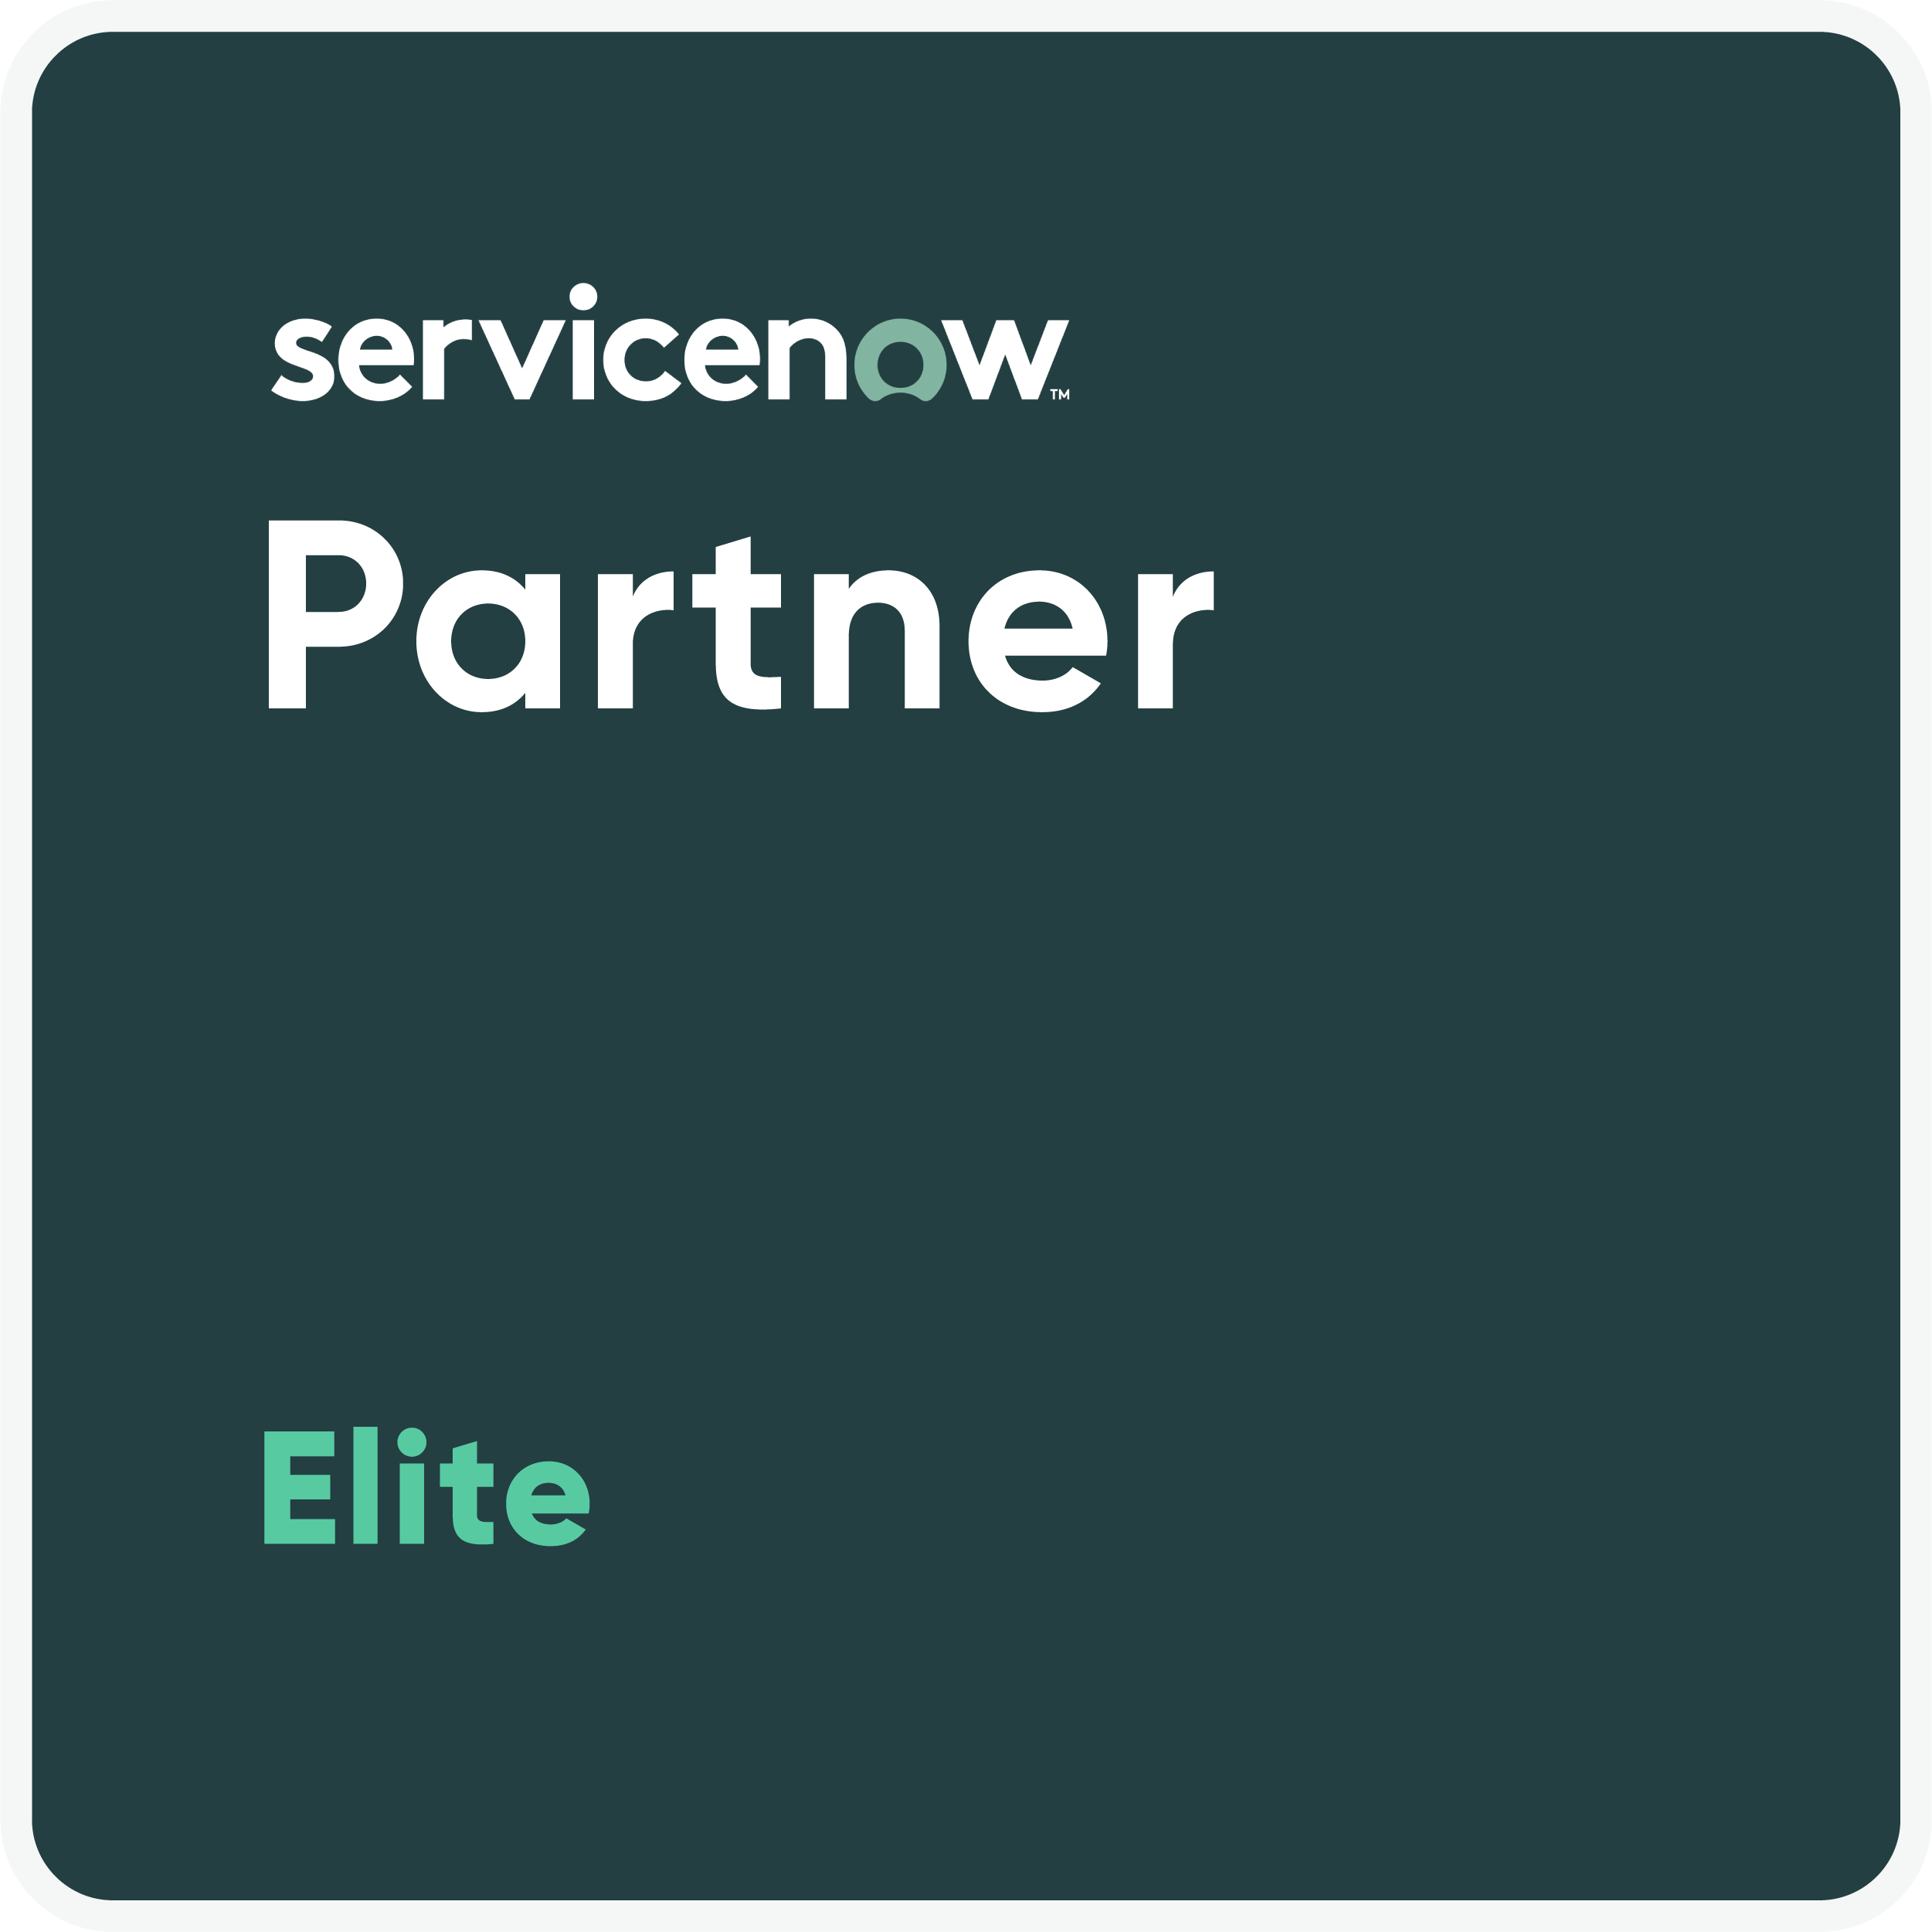 Devoteam as the Elite Partner of ServiceNow